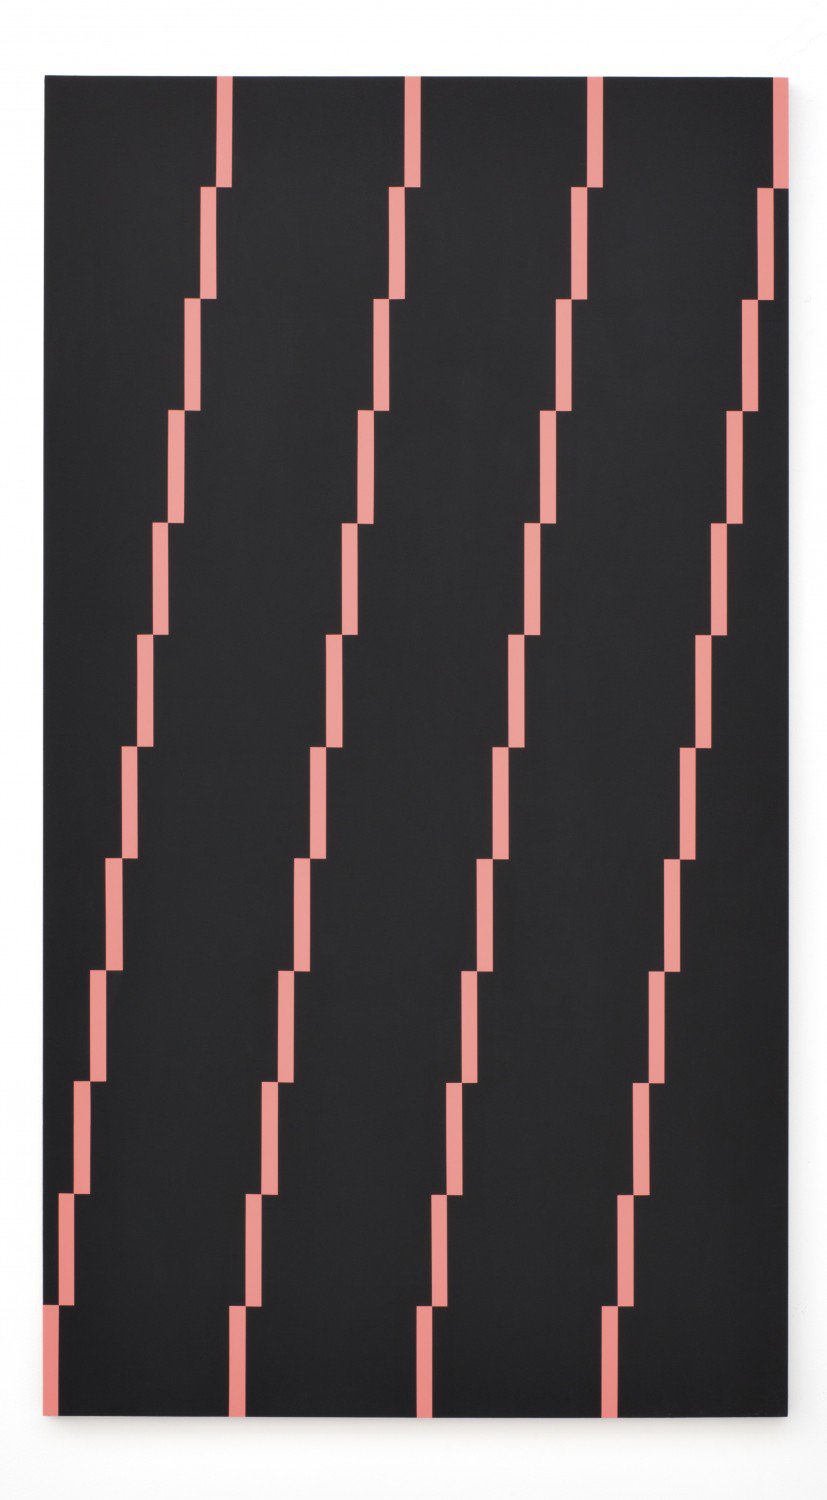 Nick OberthalerUntitled (ubi dubium ibi libertas), 2015Primer, black gesso, acrylics on aluminium mounted onto stainless steel frame180 x 100 cm